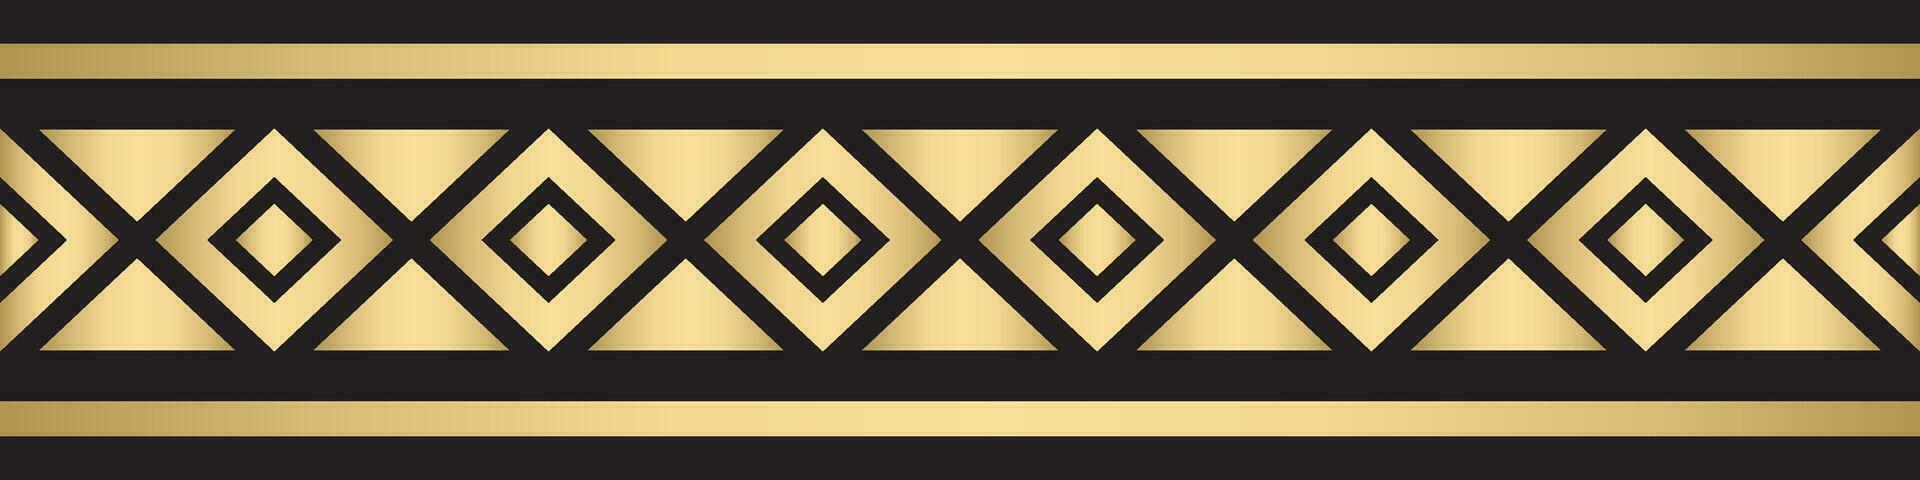 gyllene sömlös geometrisk mönster aztec etnisk stam. vektor